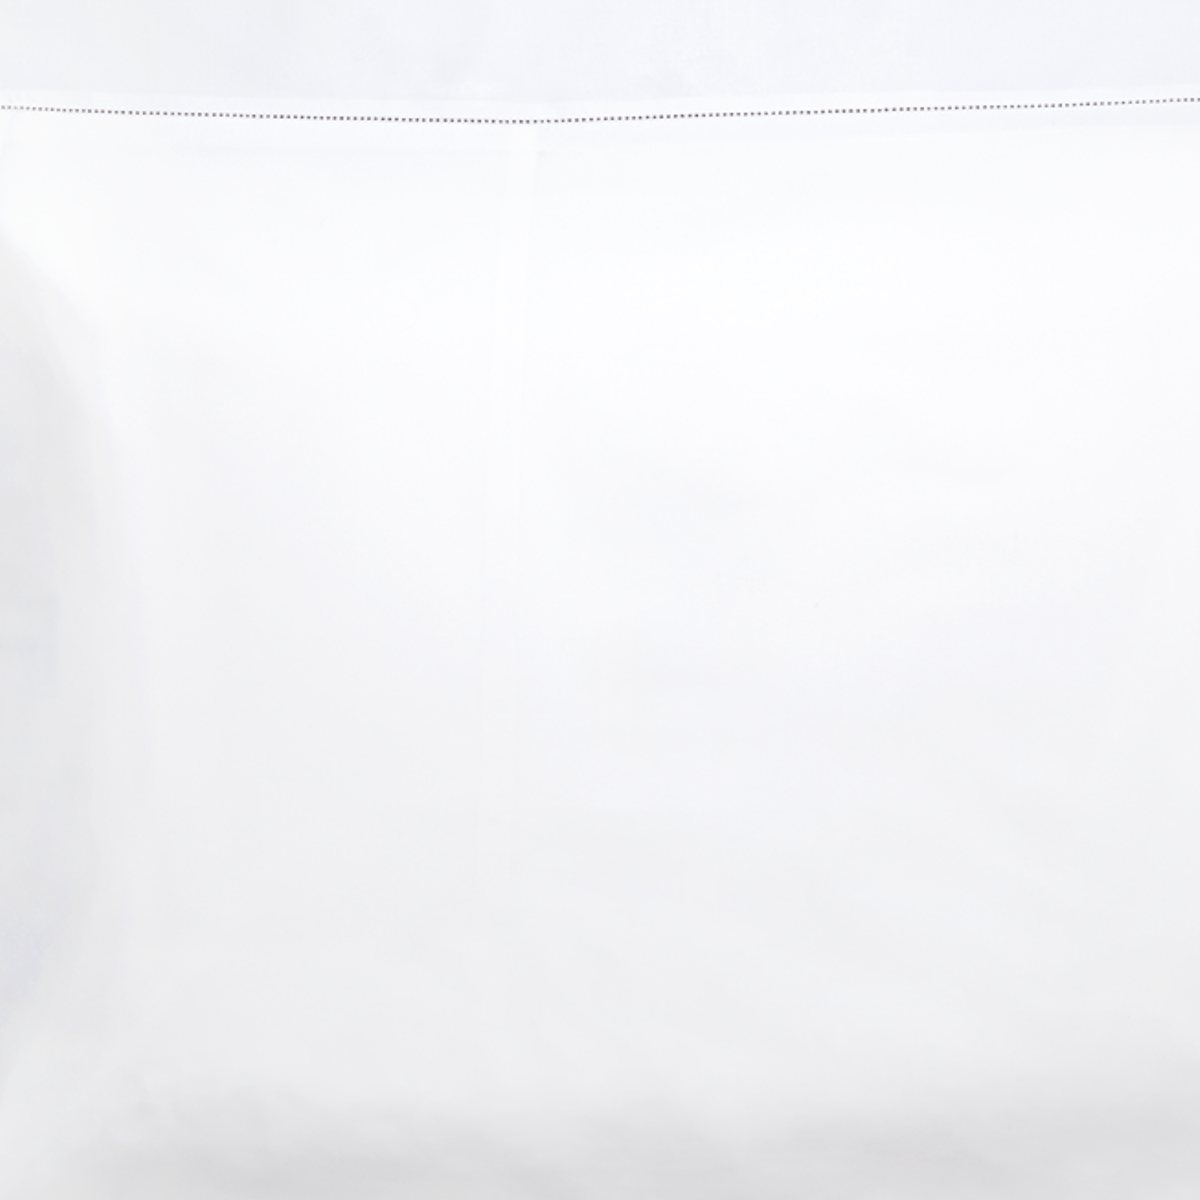 Fabric Closeup of Matouk Luca Hemstitch Bedding in White Color